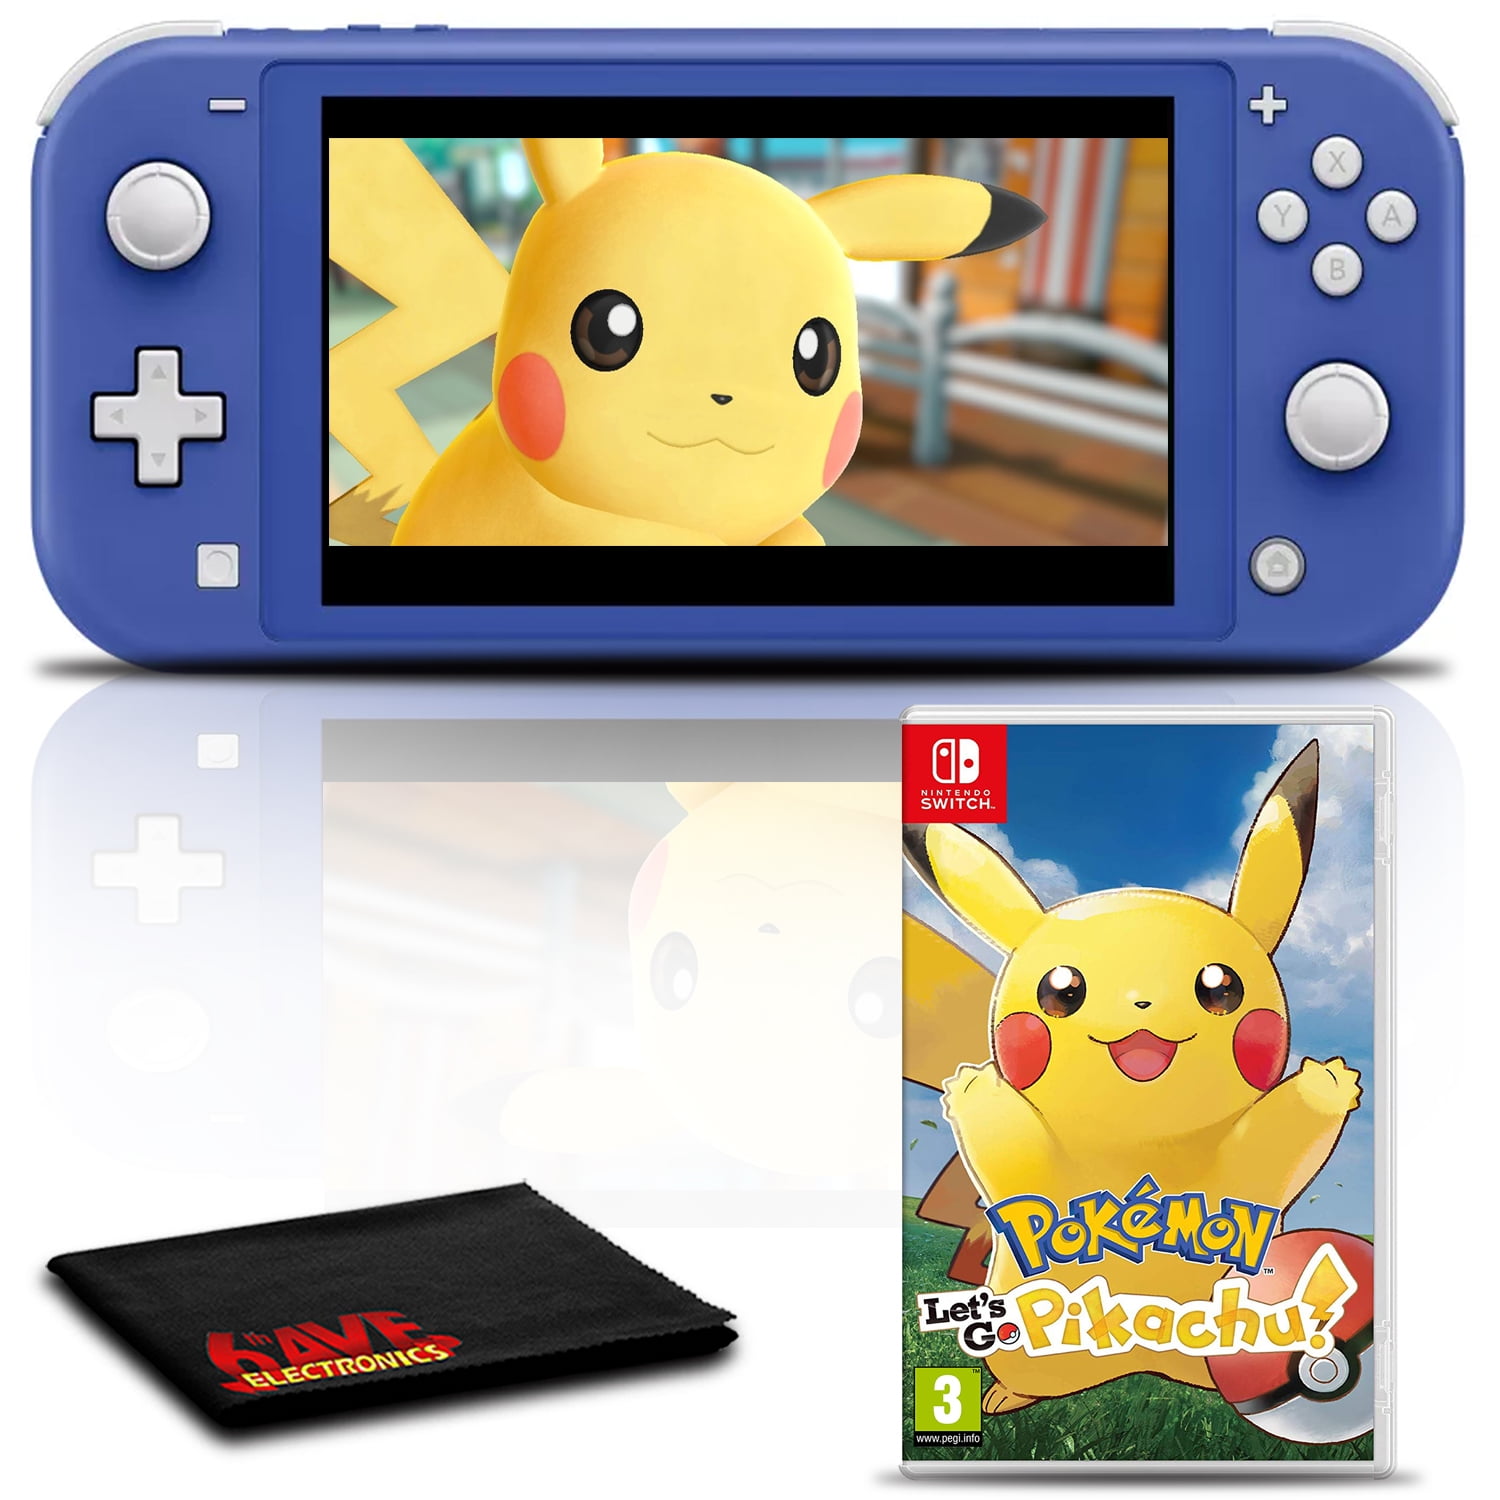 Nintendo cat. Nintendo Switch Lite Pikachu. Nintendo Switch Pokemon Edition.